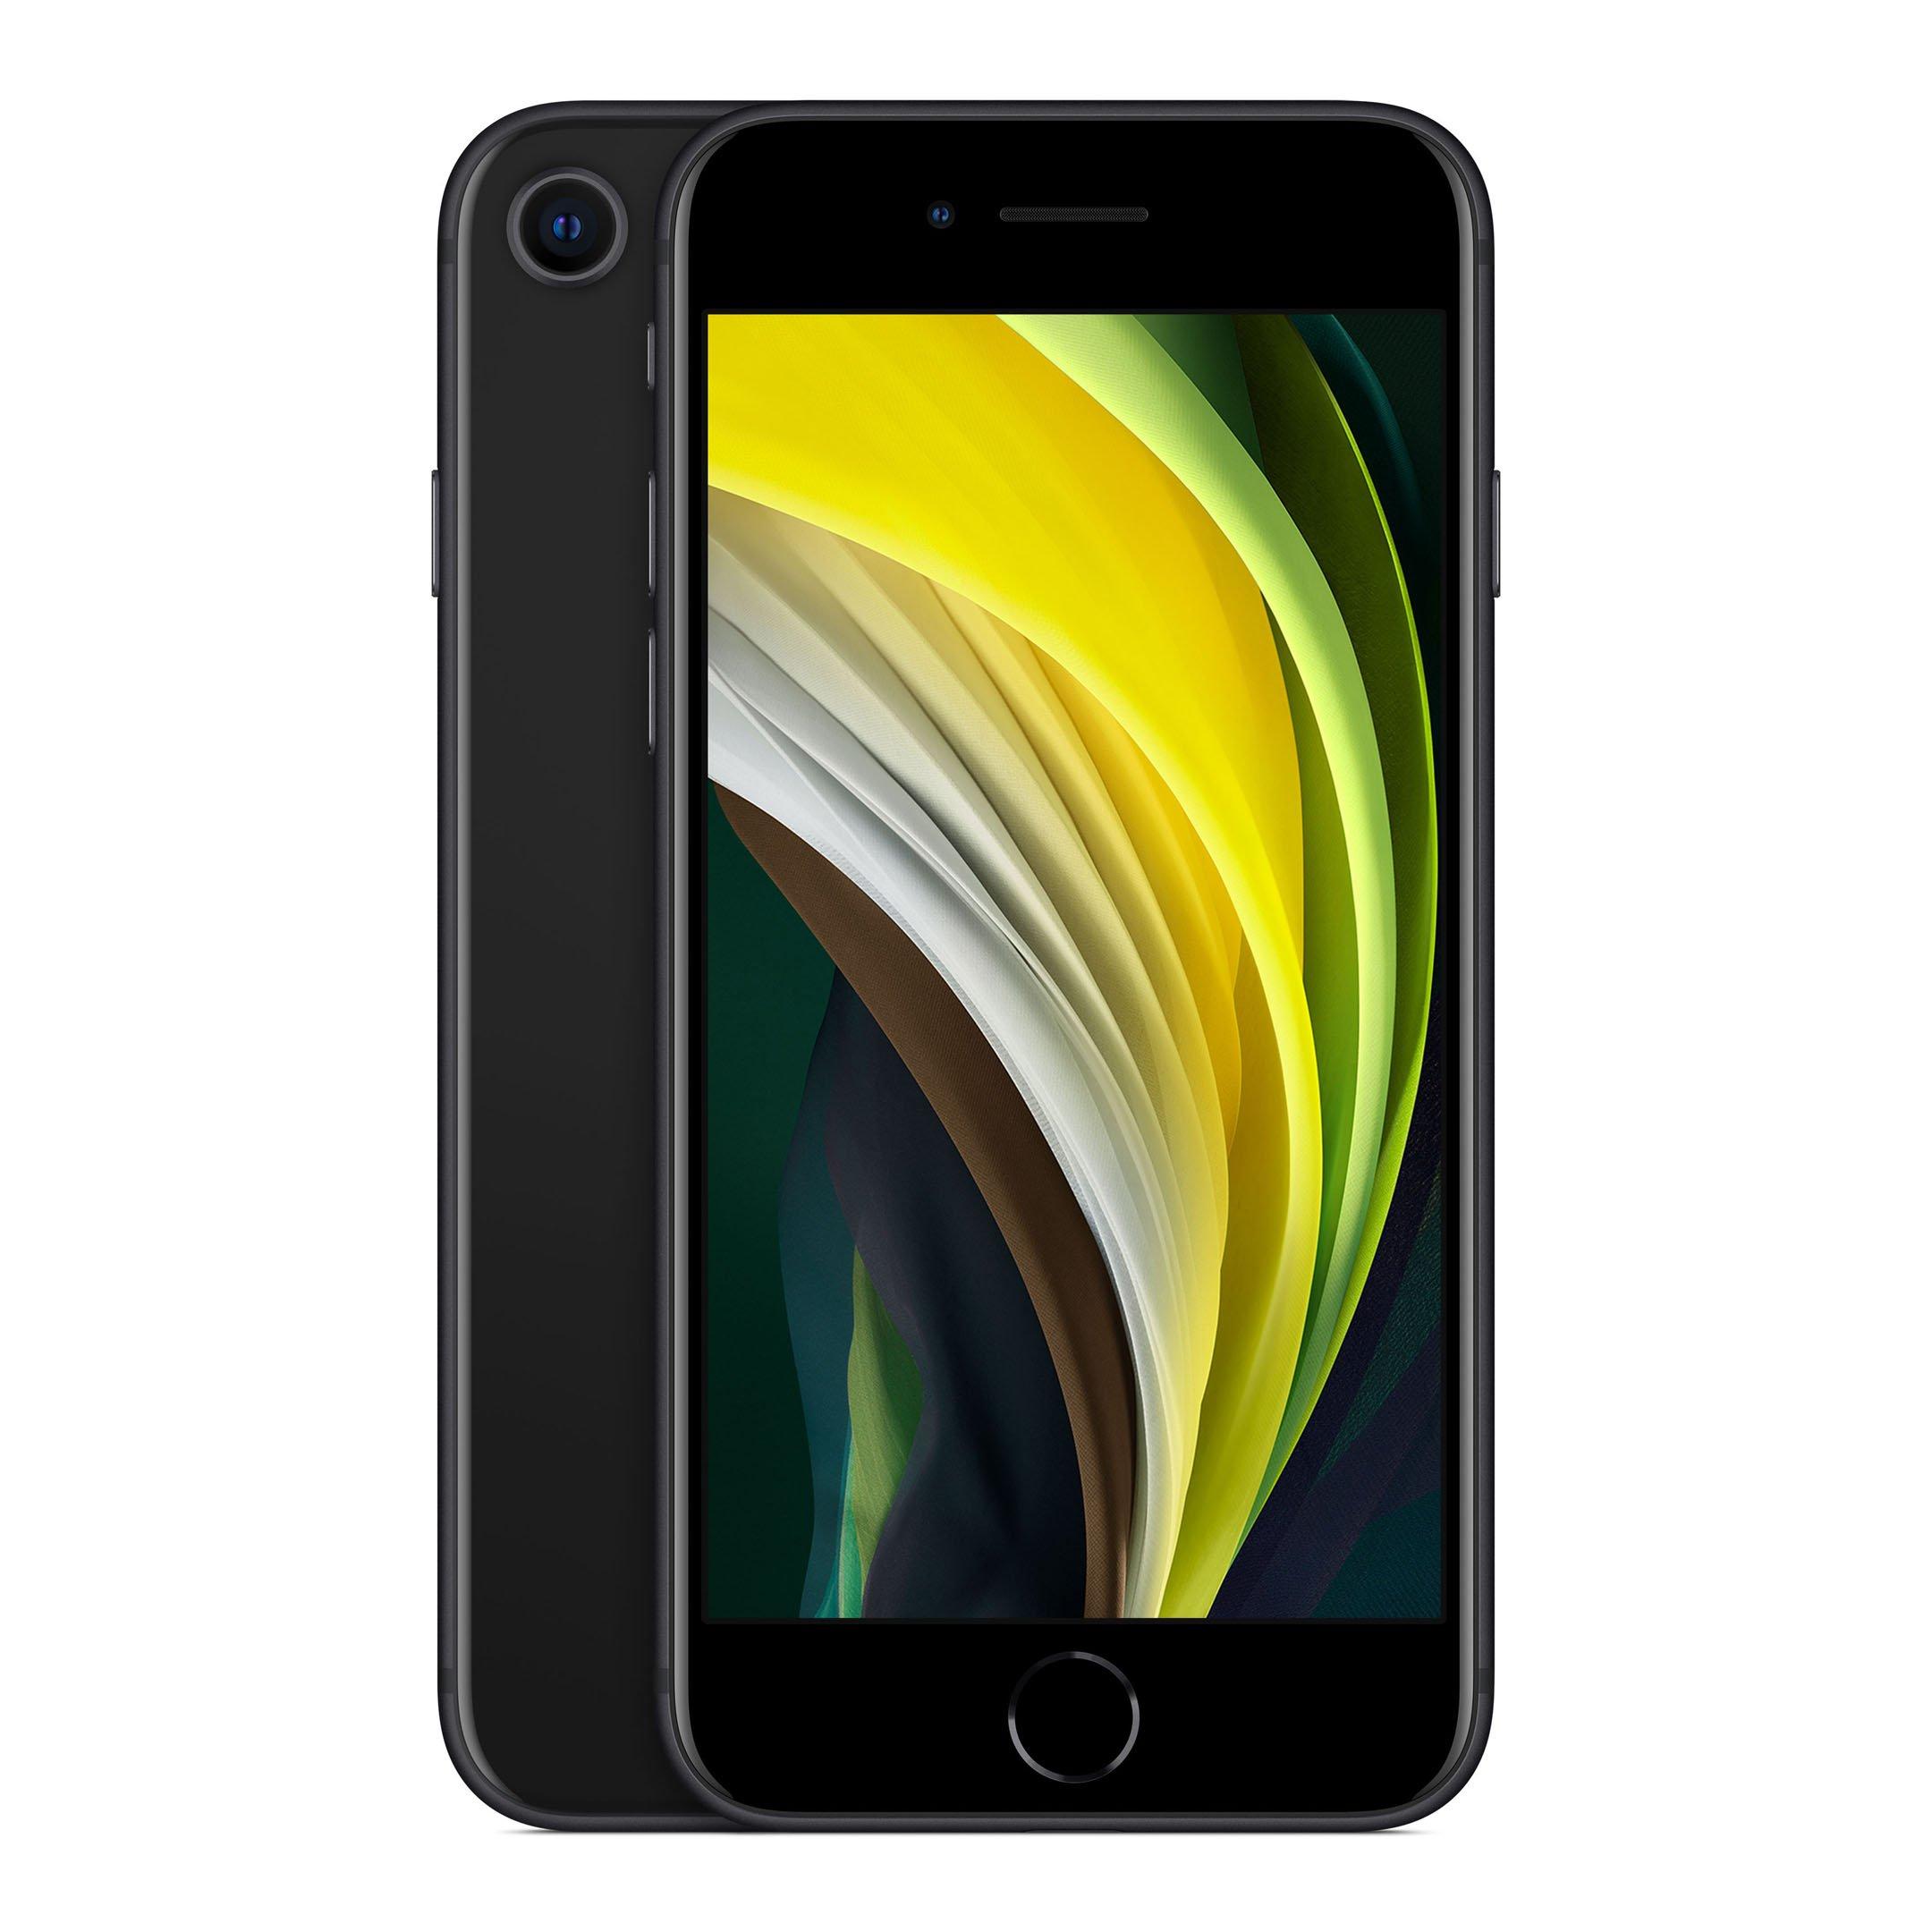 Apple iPhone SE 2020, 128GB, Black price in Saudi Arabia